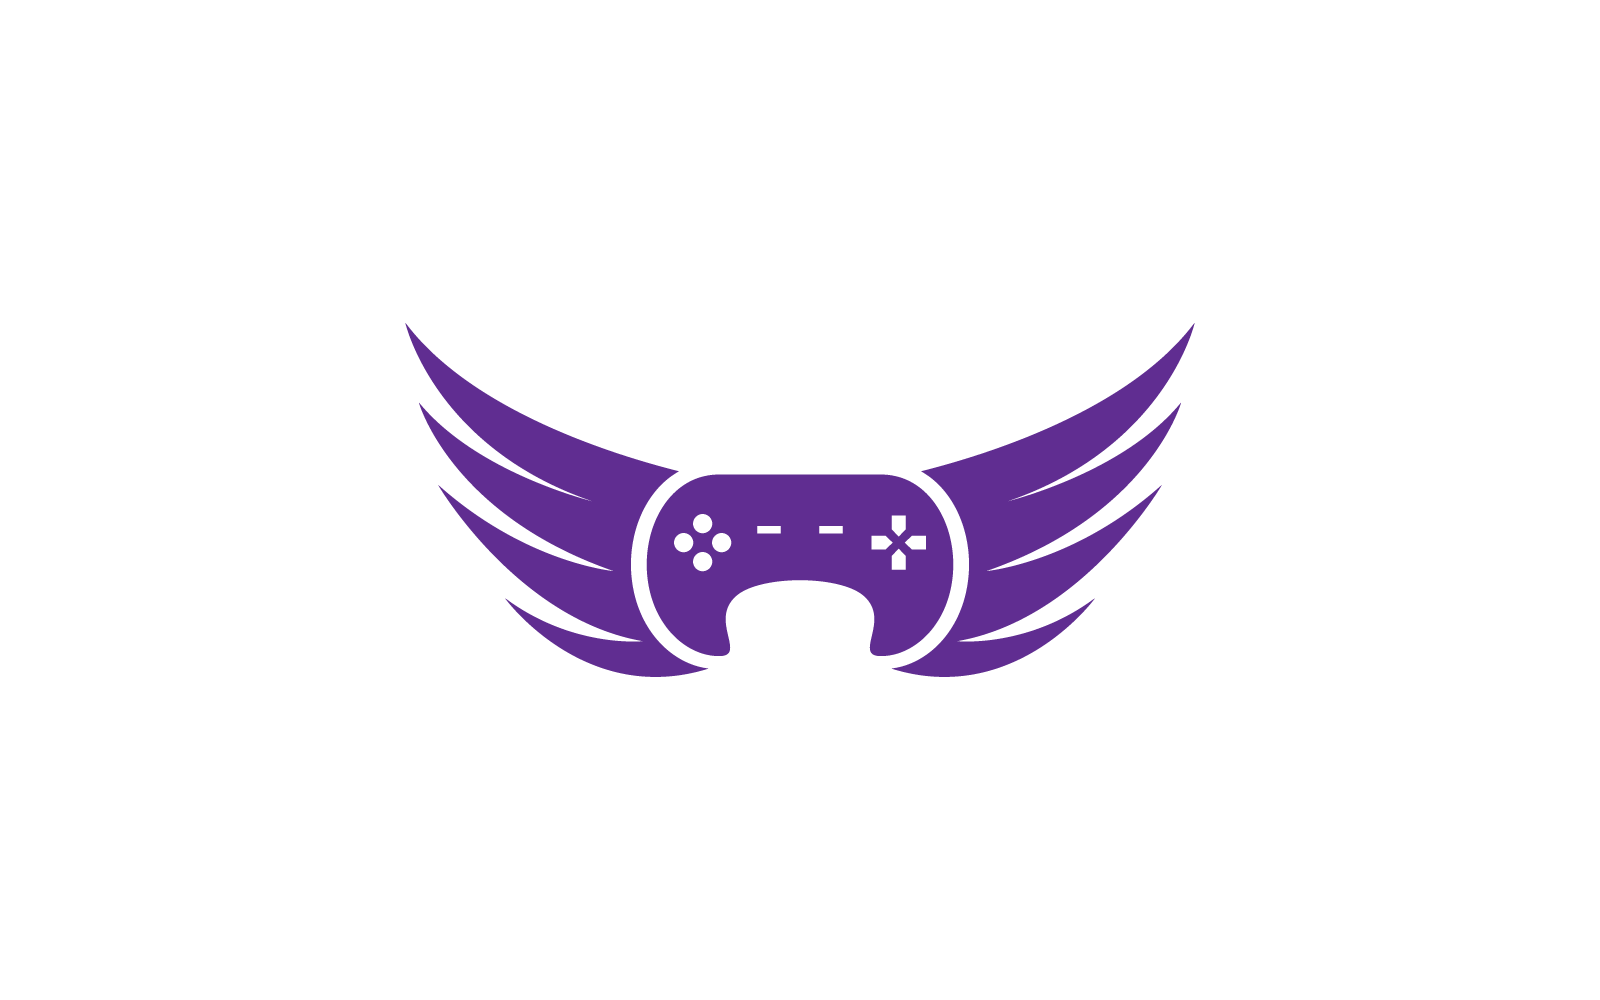 Flying Joystick game illustration vector template Logo Template